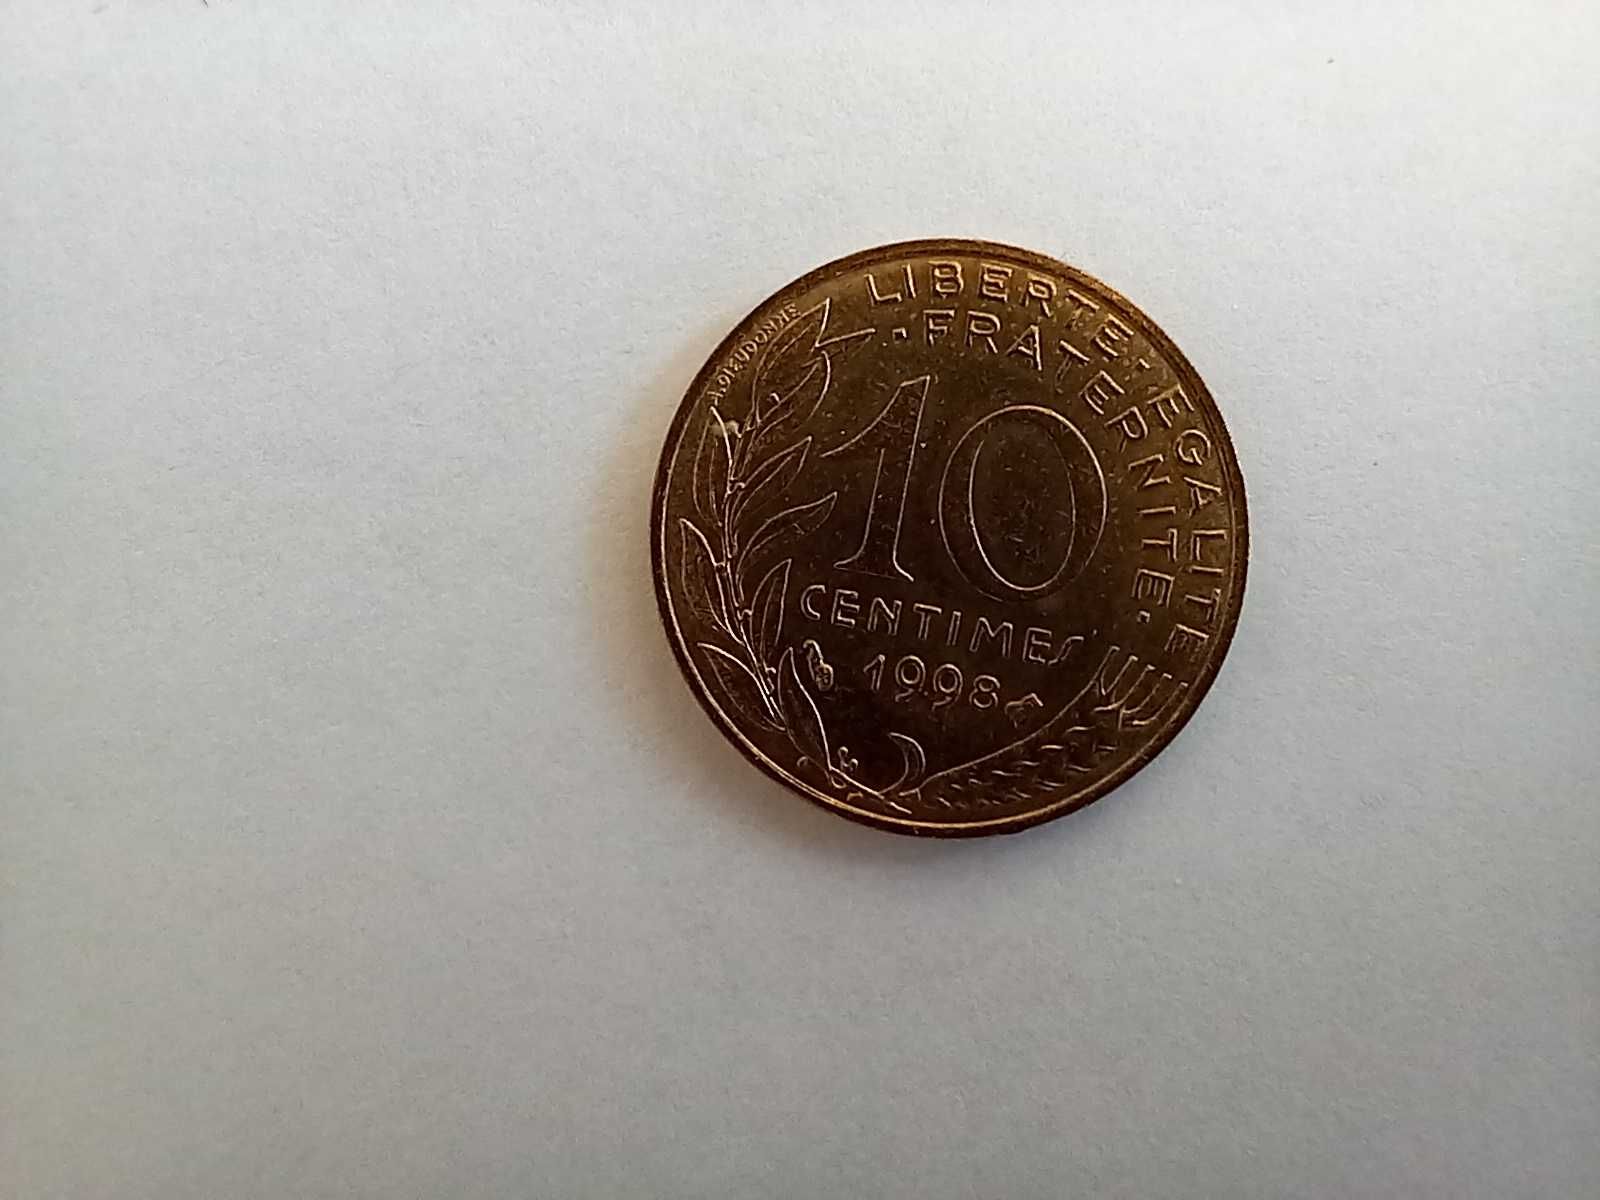 Moneta Francja - 10 centymów 1998 /18/